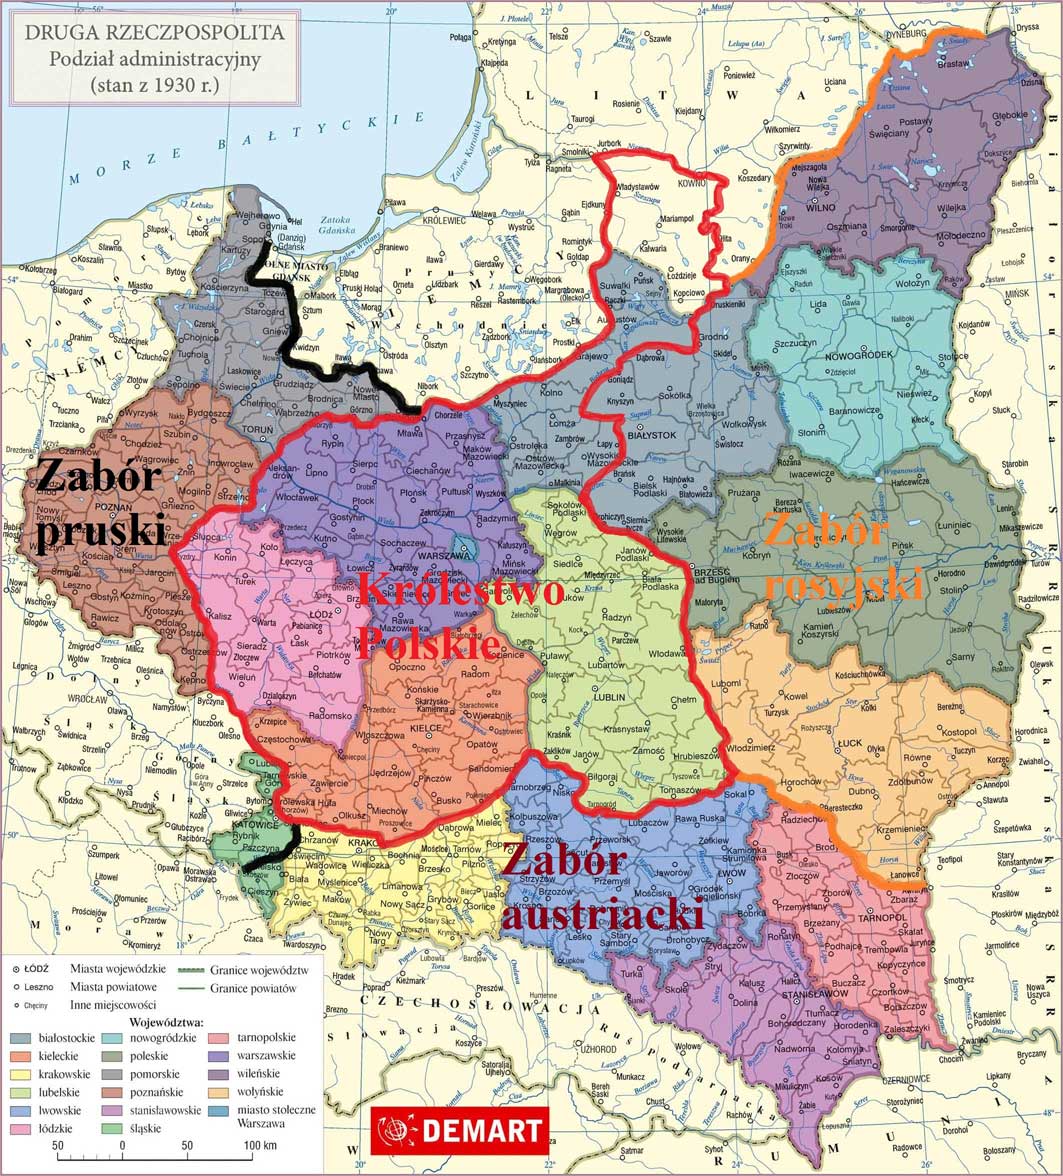 map of Poland in the interwar period